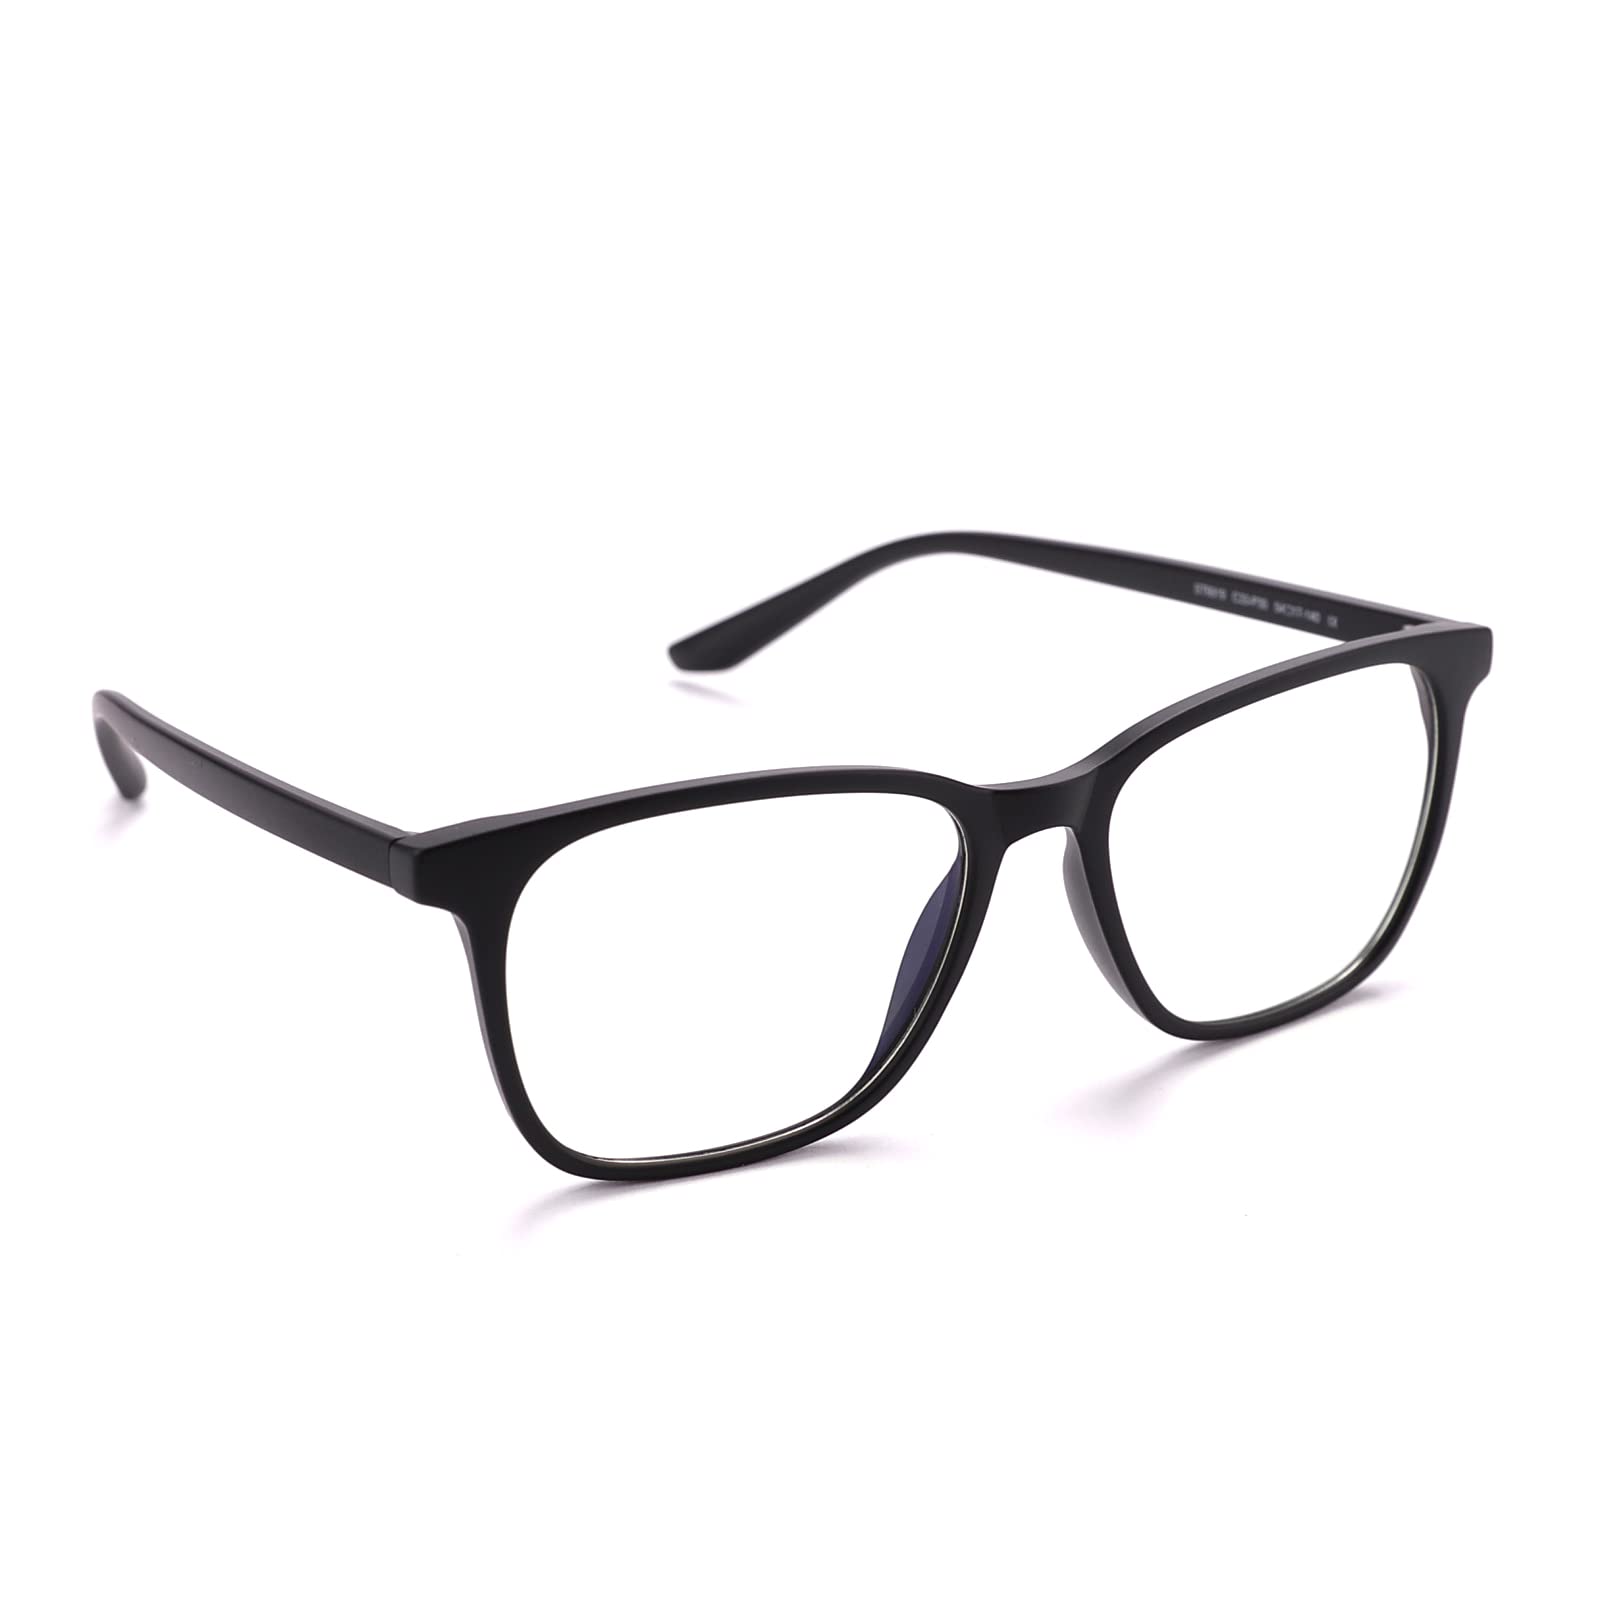 Intellilens Square Blue Cut Computer Glasses for Eye Protection | Zero Power, Anti Glare & Blue Light Filter Glasses | UV Protection Eye Glass for Men & Women (Black) (45-17-140)